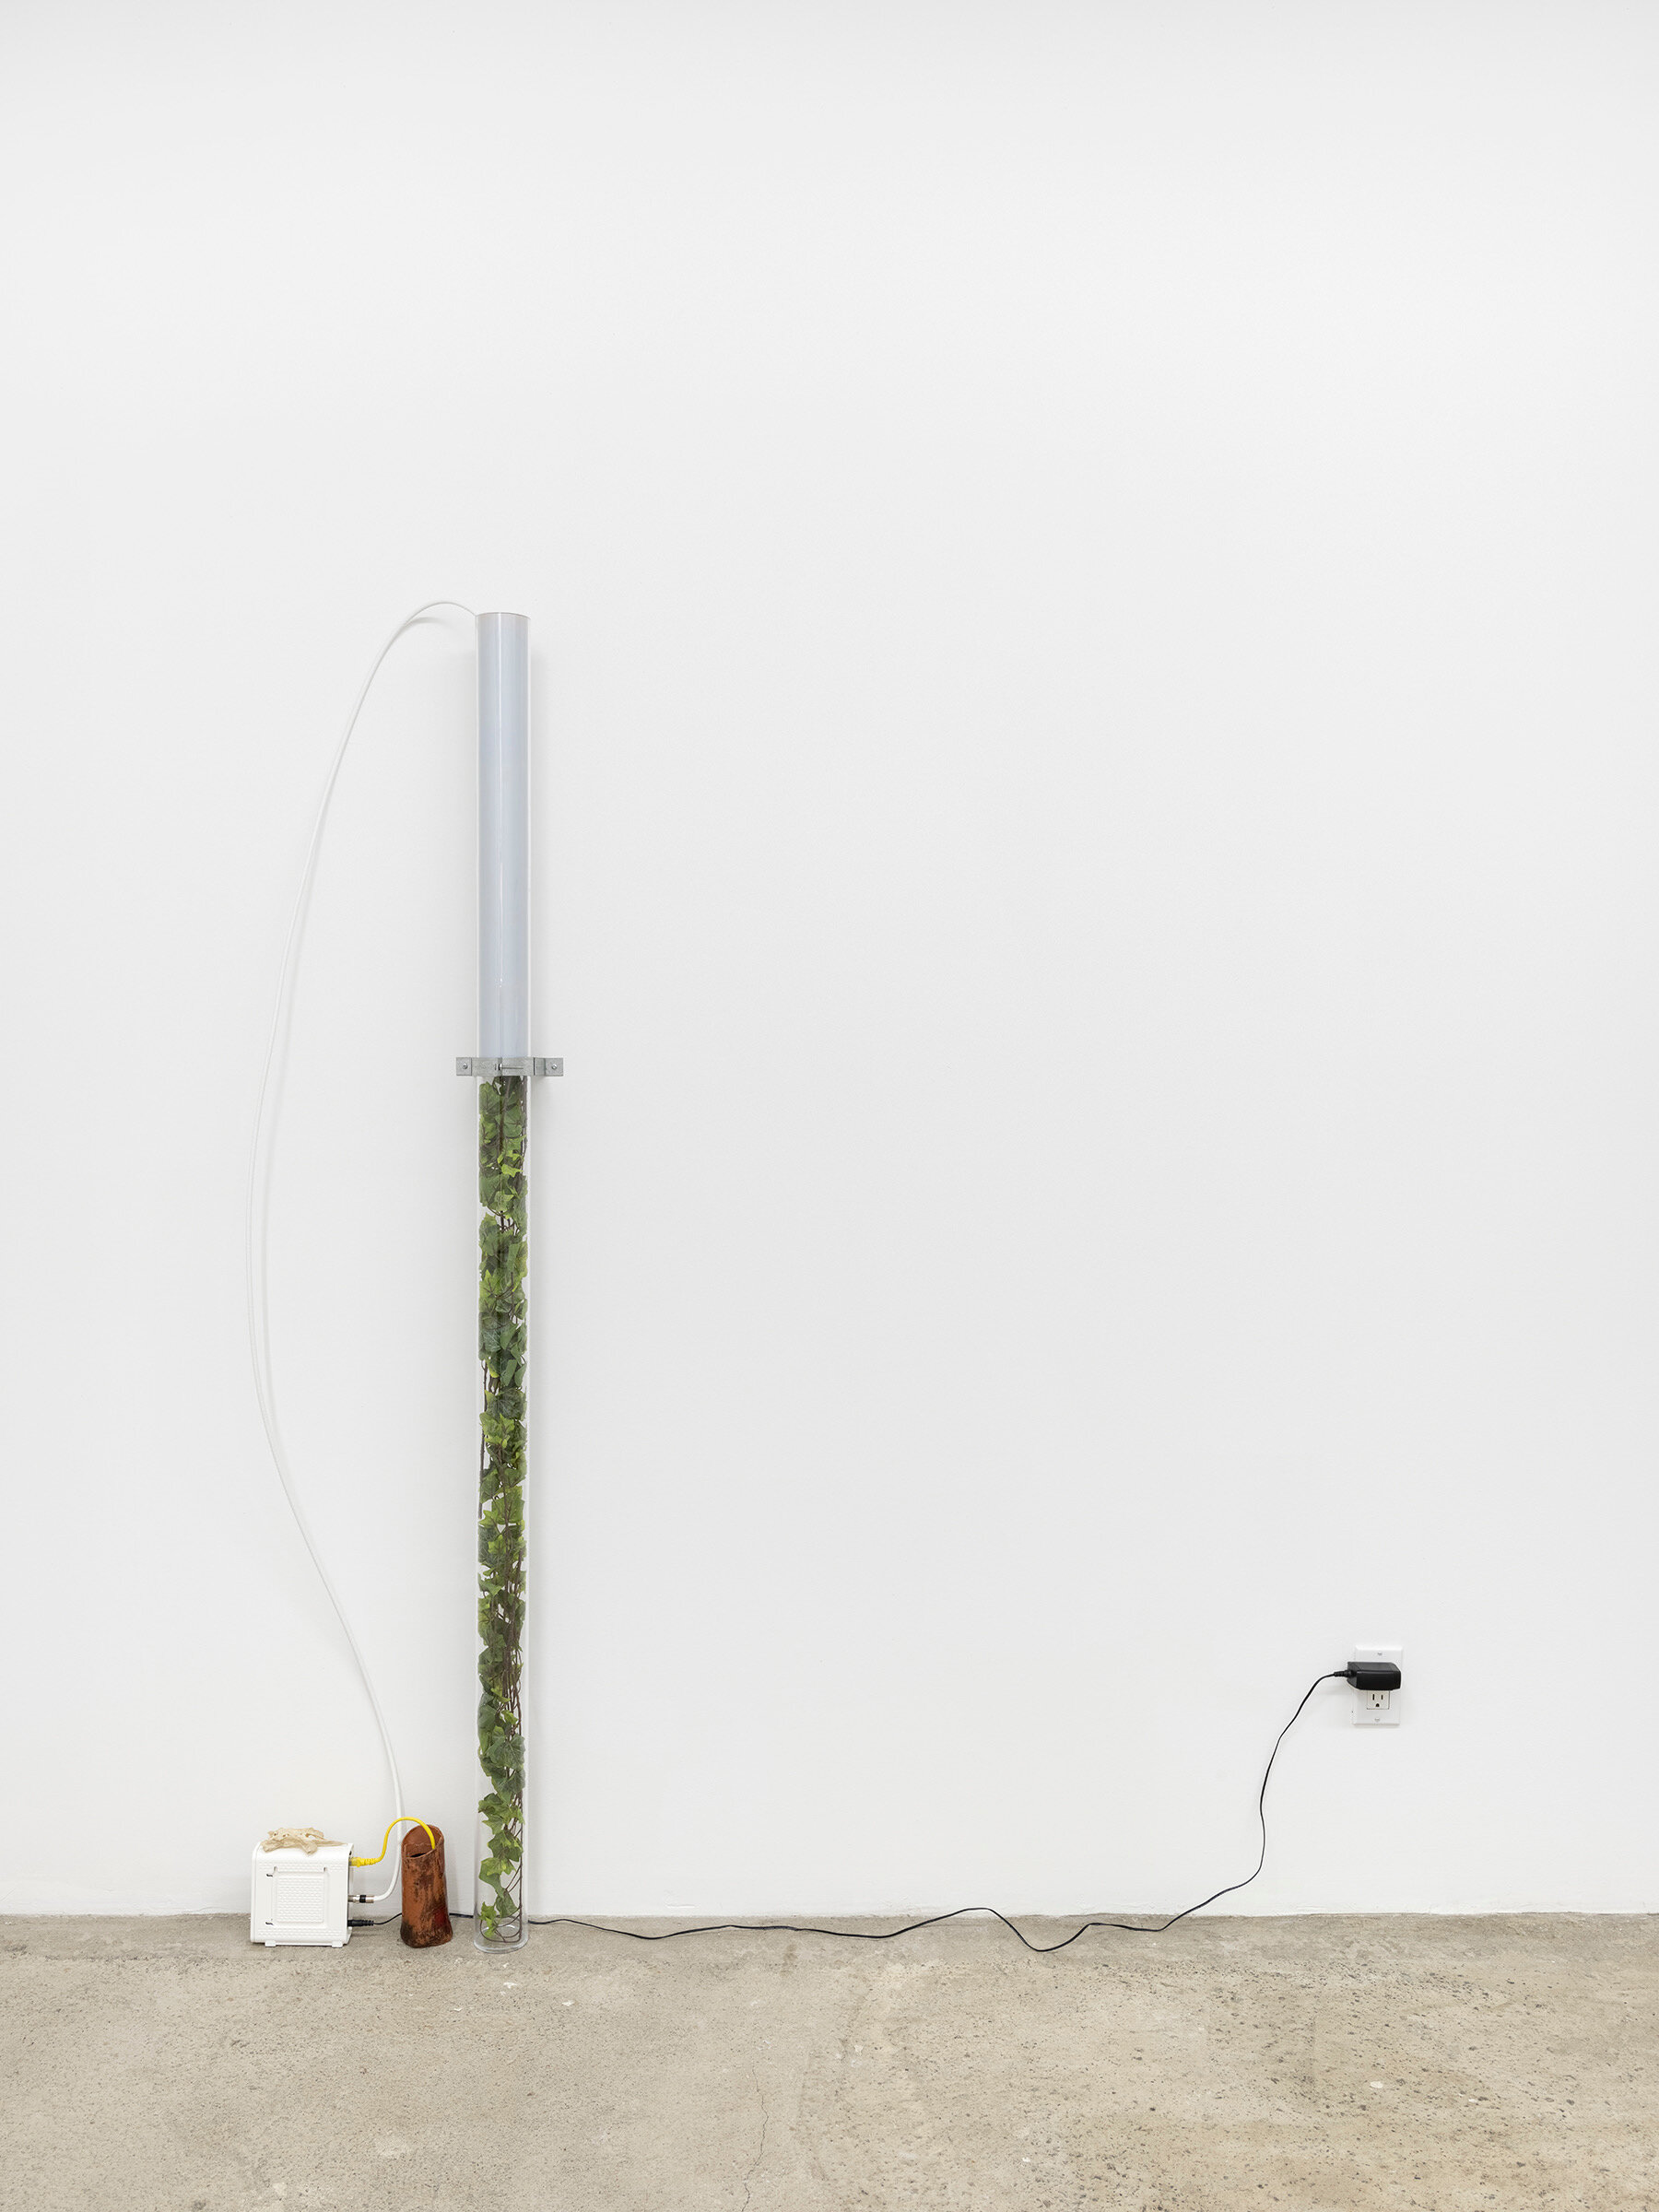  Connor McNicholas  Phase Transition,  2020 Plexiglass, unprocessed photographic paper, artificial ivy,  ceramic, water, endoskeleton, modem, cables, hardware 72 x 10 inches (183 x 25 cm) 